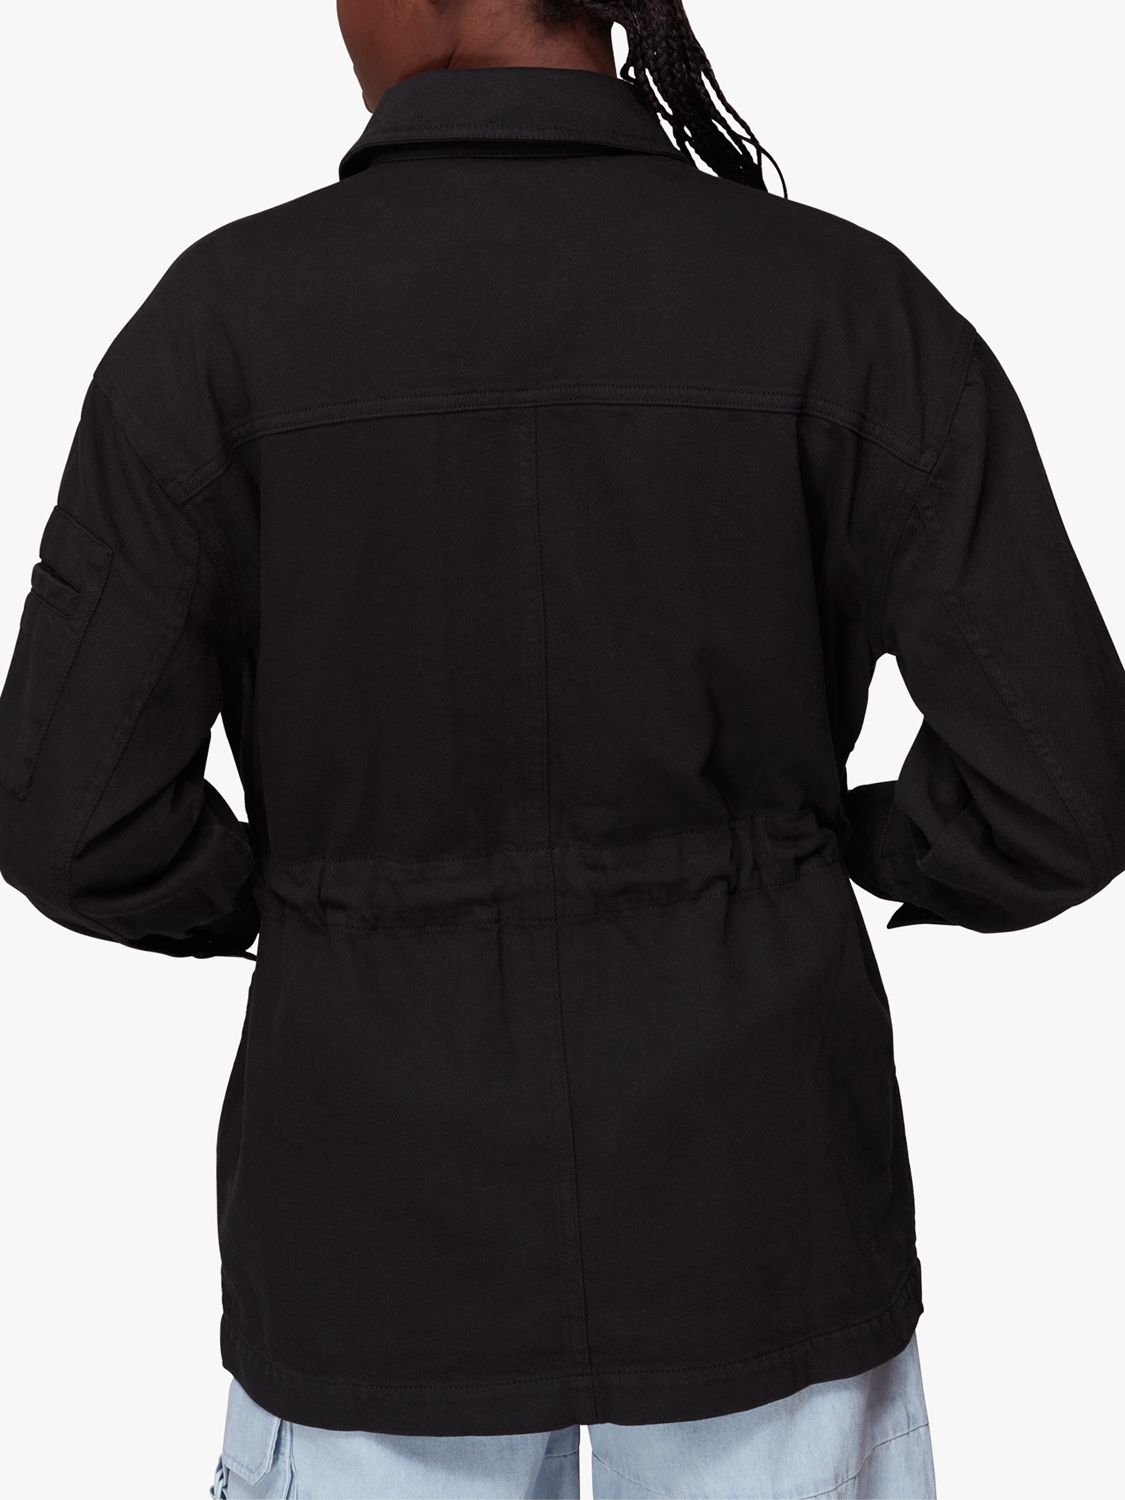 Whistles Carly Cargo Military Jacket, Washed Black at John Lewis & Partners